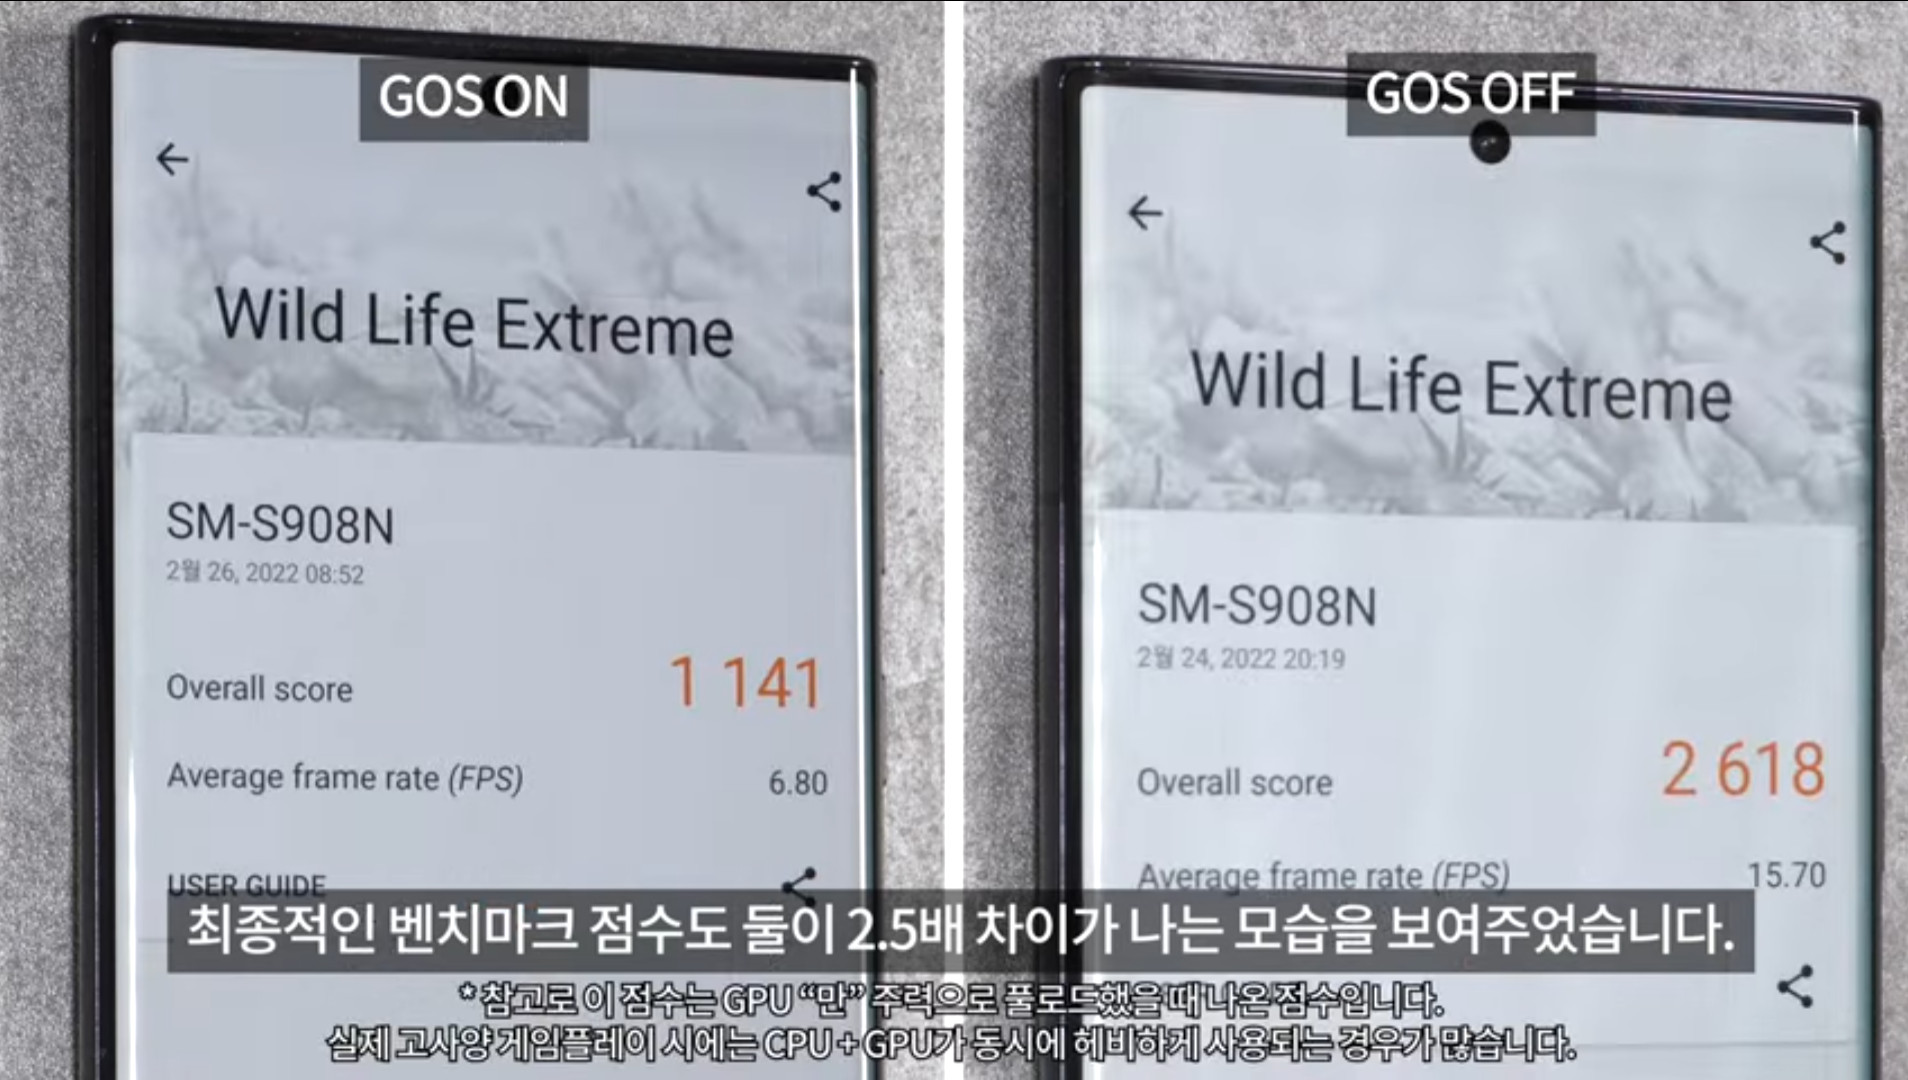 Samsung GOS Vierkant Droom